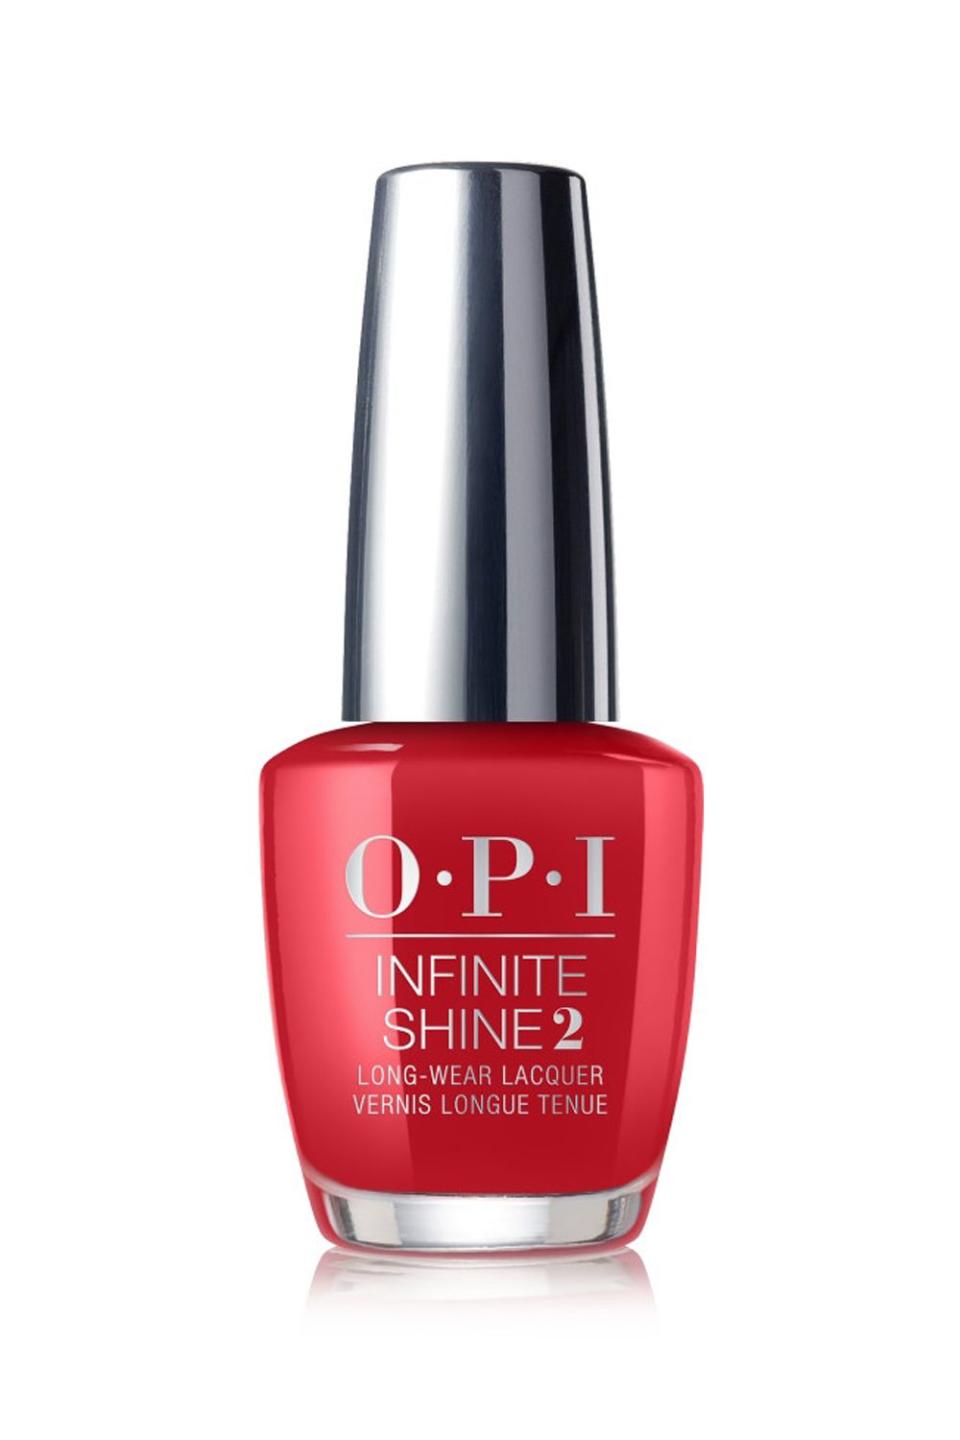 1) OPI Infinite Shine Long-Wear Nail Polish in Big Red Apple